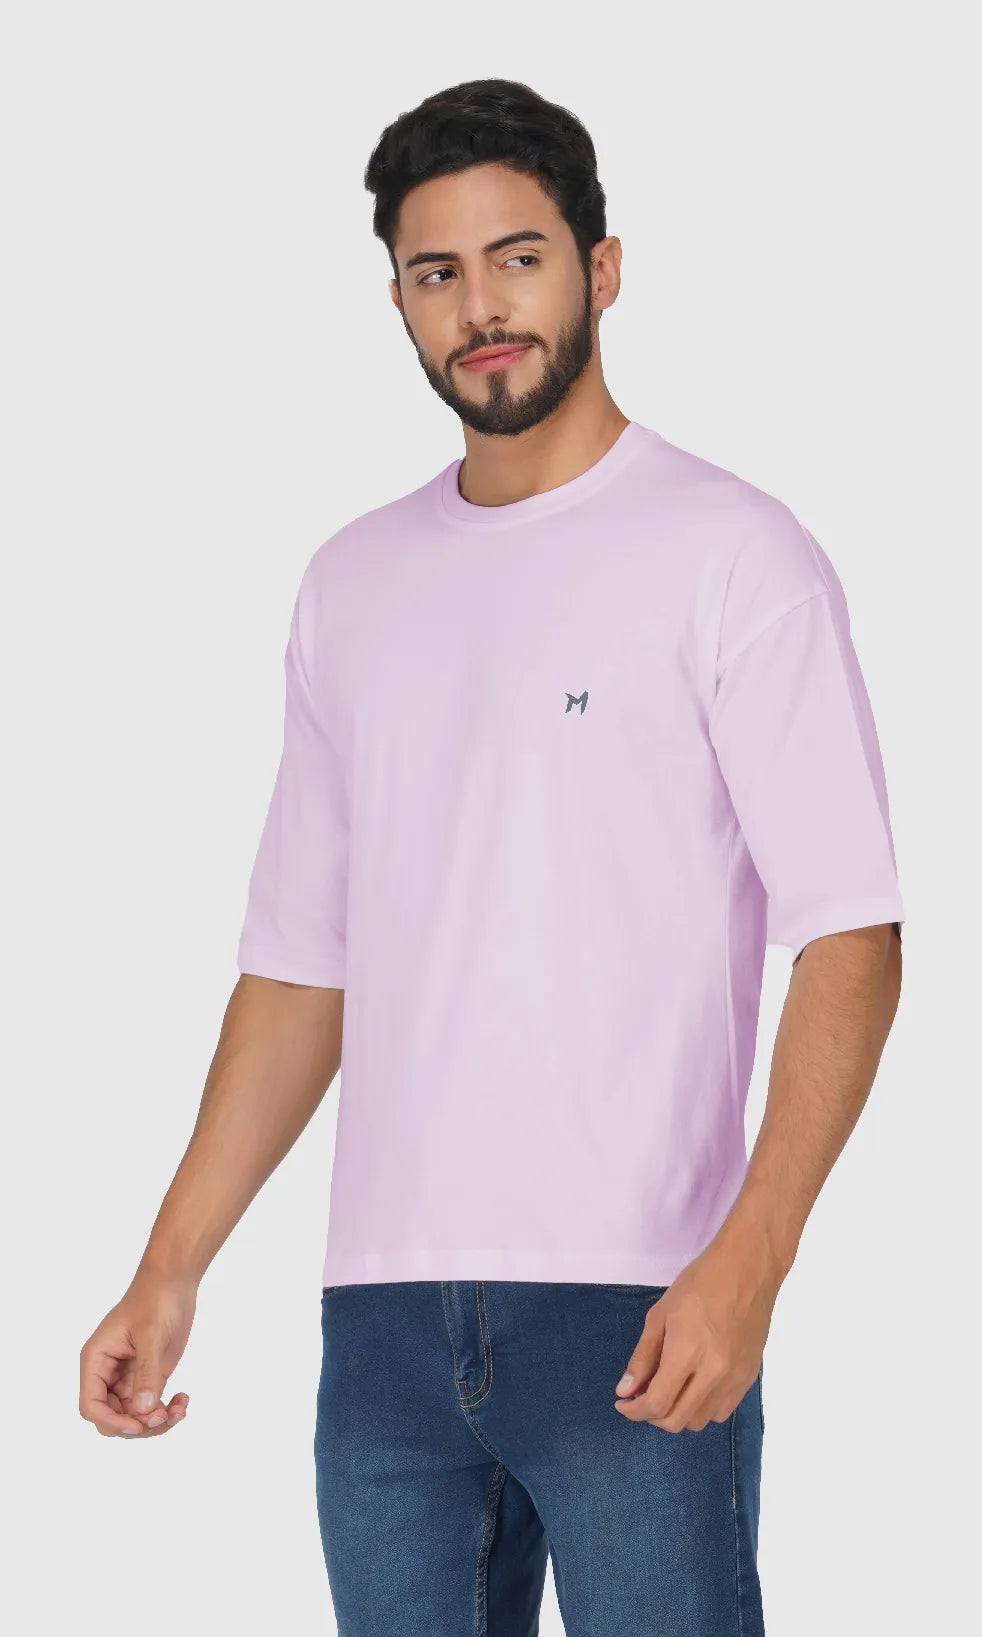 Mebadass Cotton Men's OverSized/Baggy Dropshoulder T-shirts - Lavender